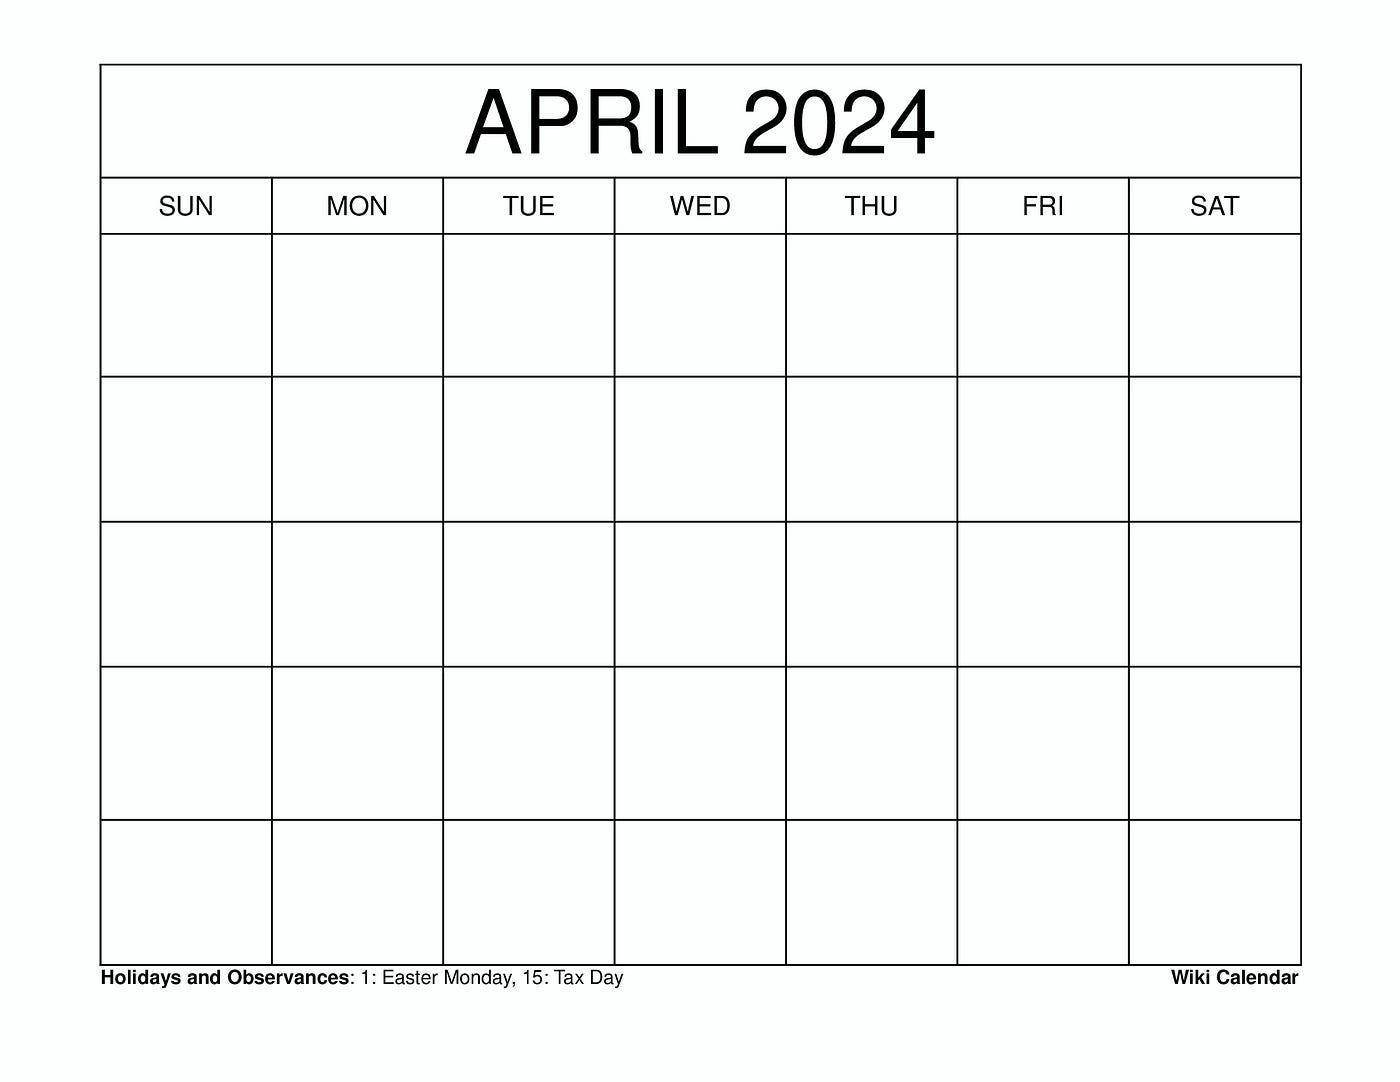 Blank April 2024 Calendar. The Wiki Calendar April 2024 Stands Out regarding April 2024 Calendar Wiki